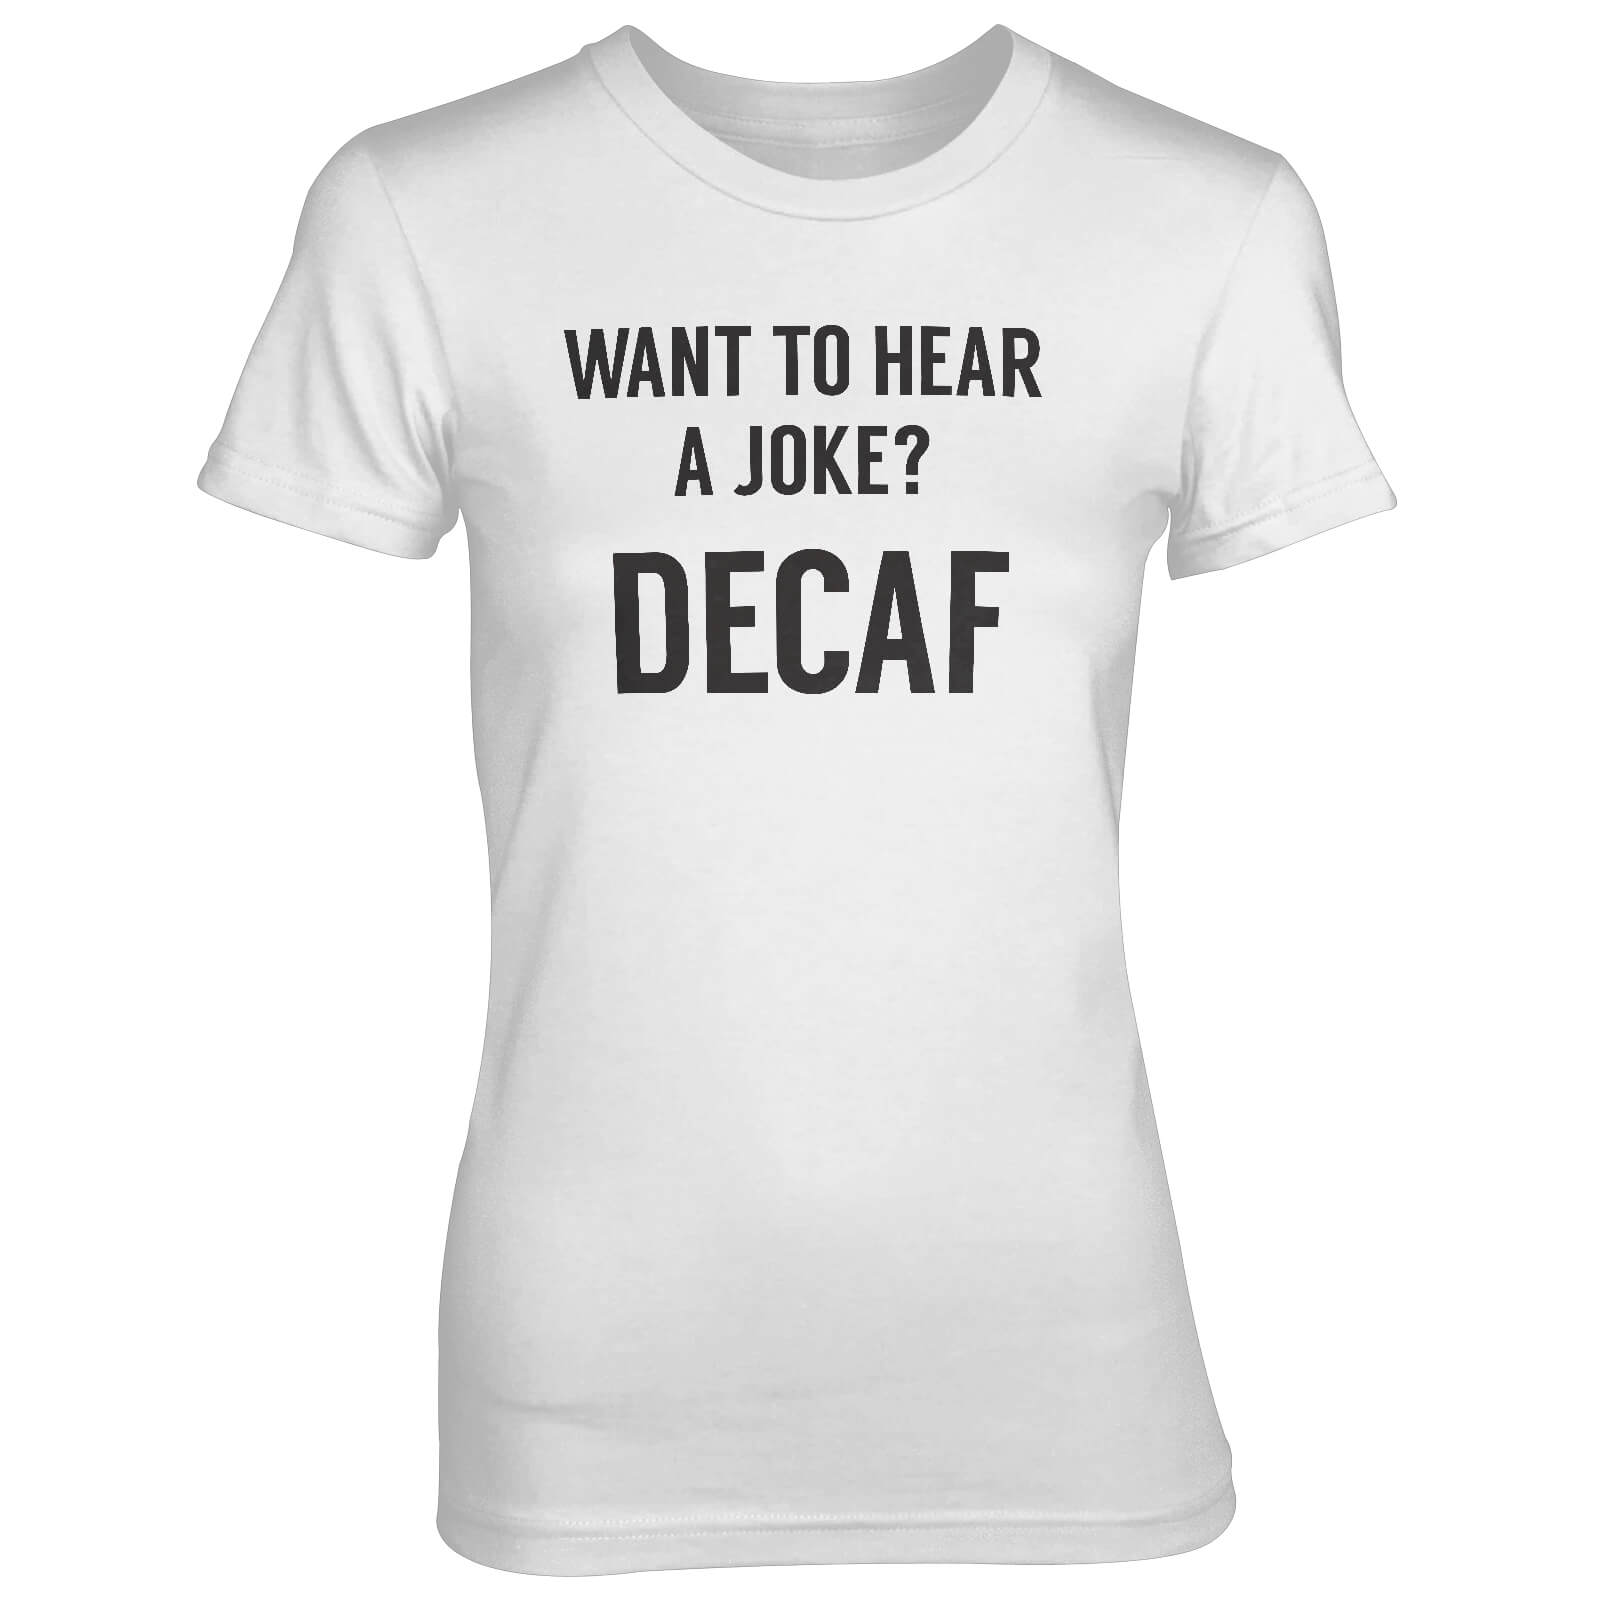 Want To Hear A Joke? DECAF Women's White T-Shirt - S - White